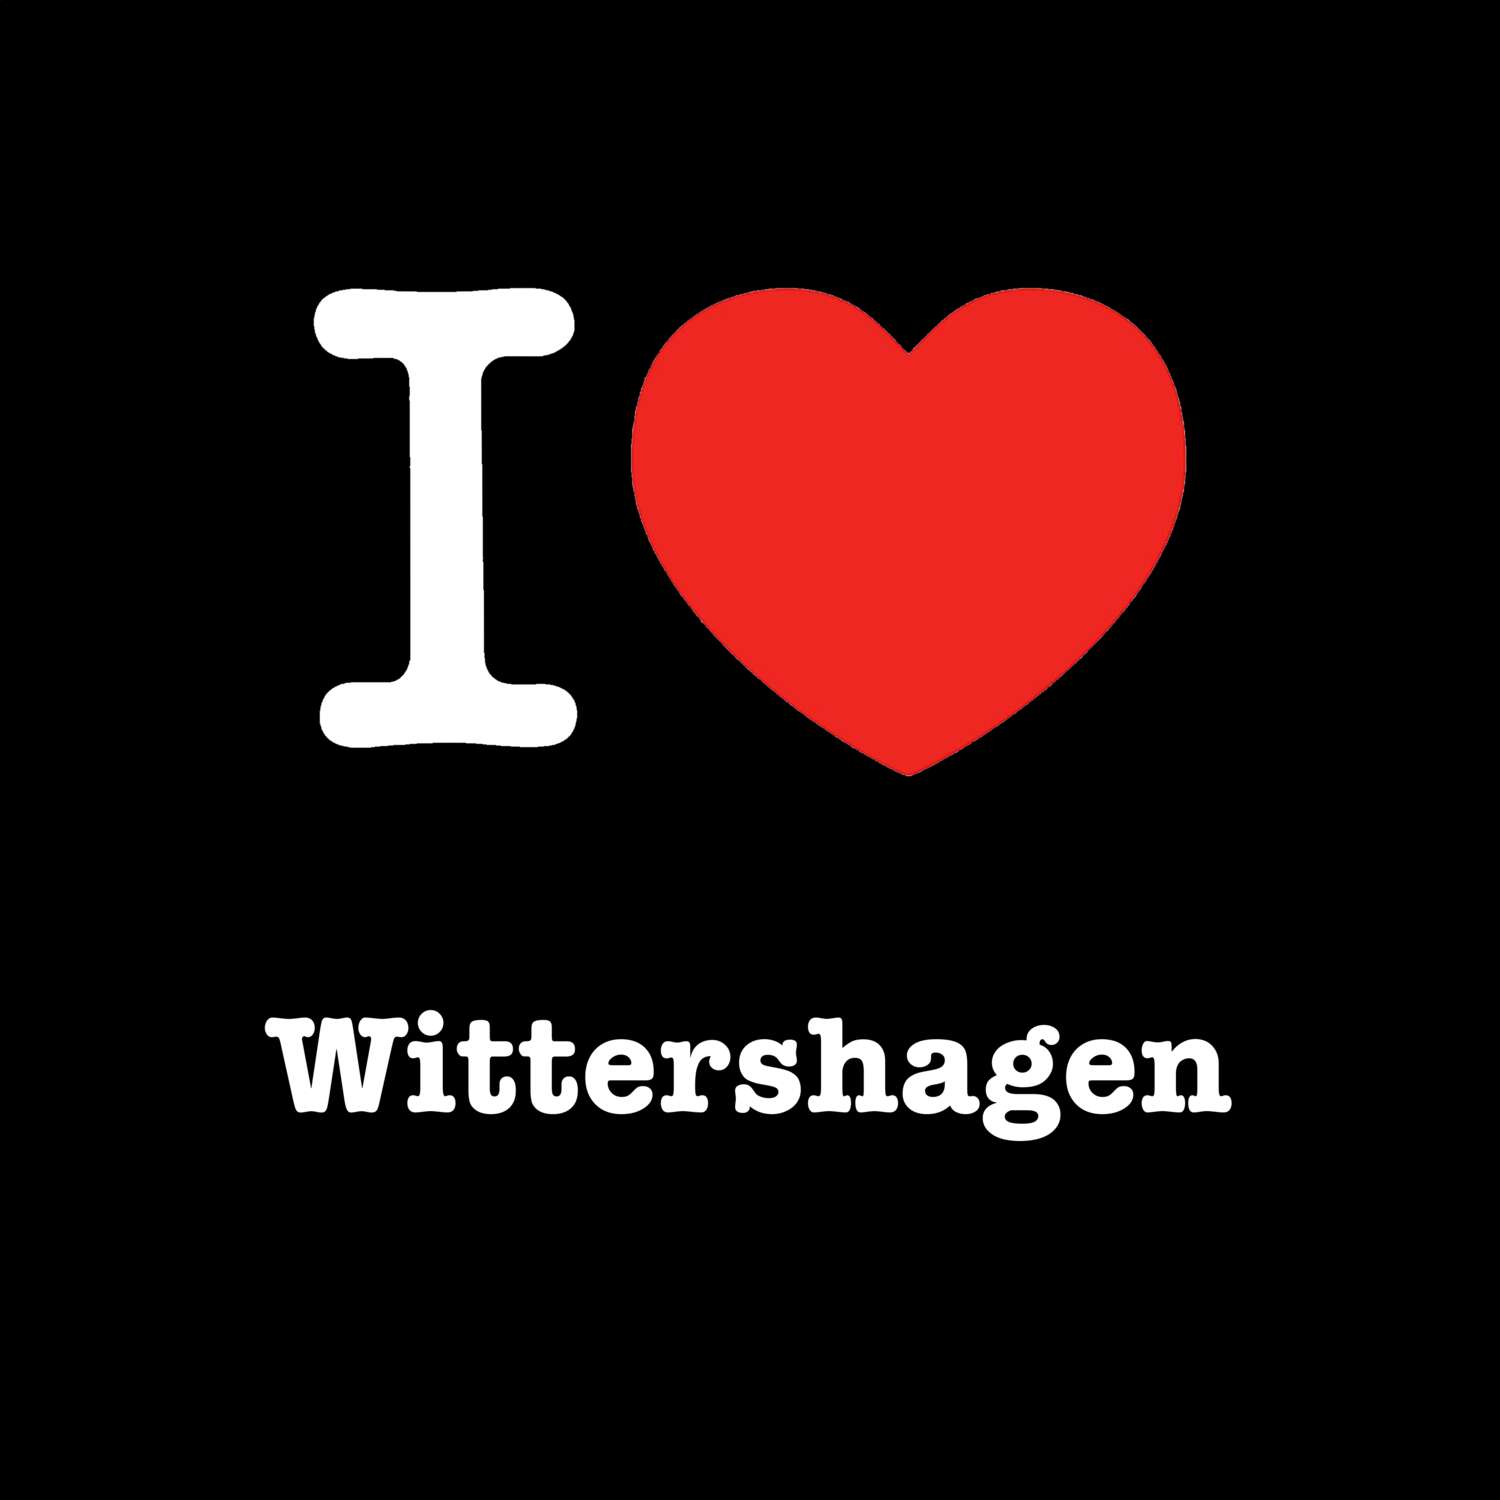 Wittershagen T-Shirt »I love«